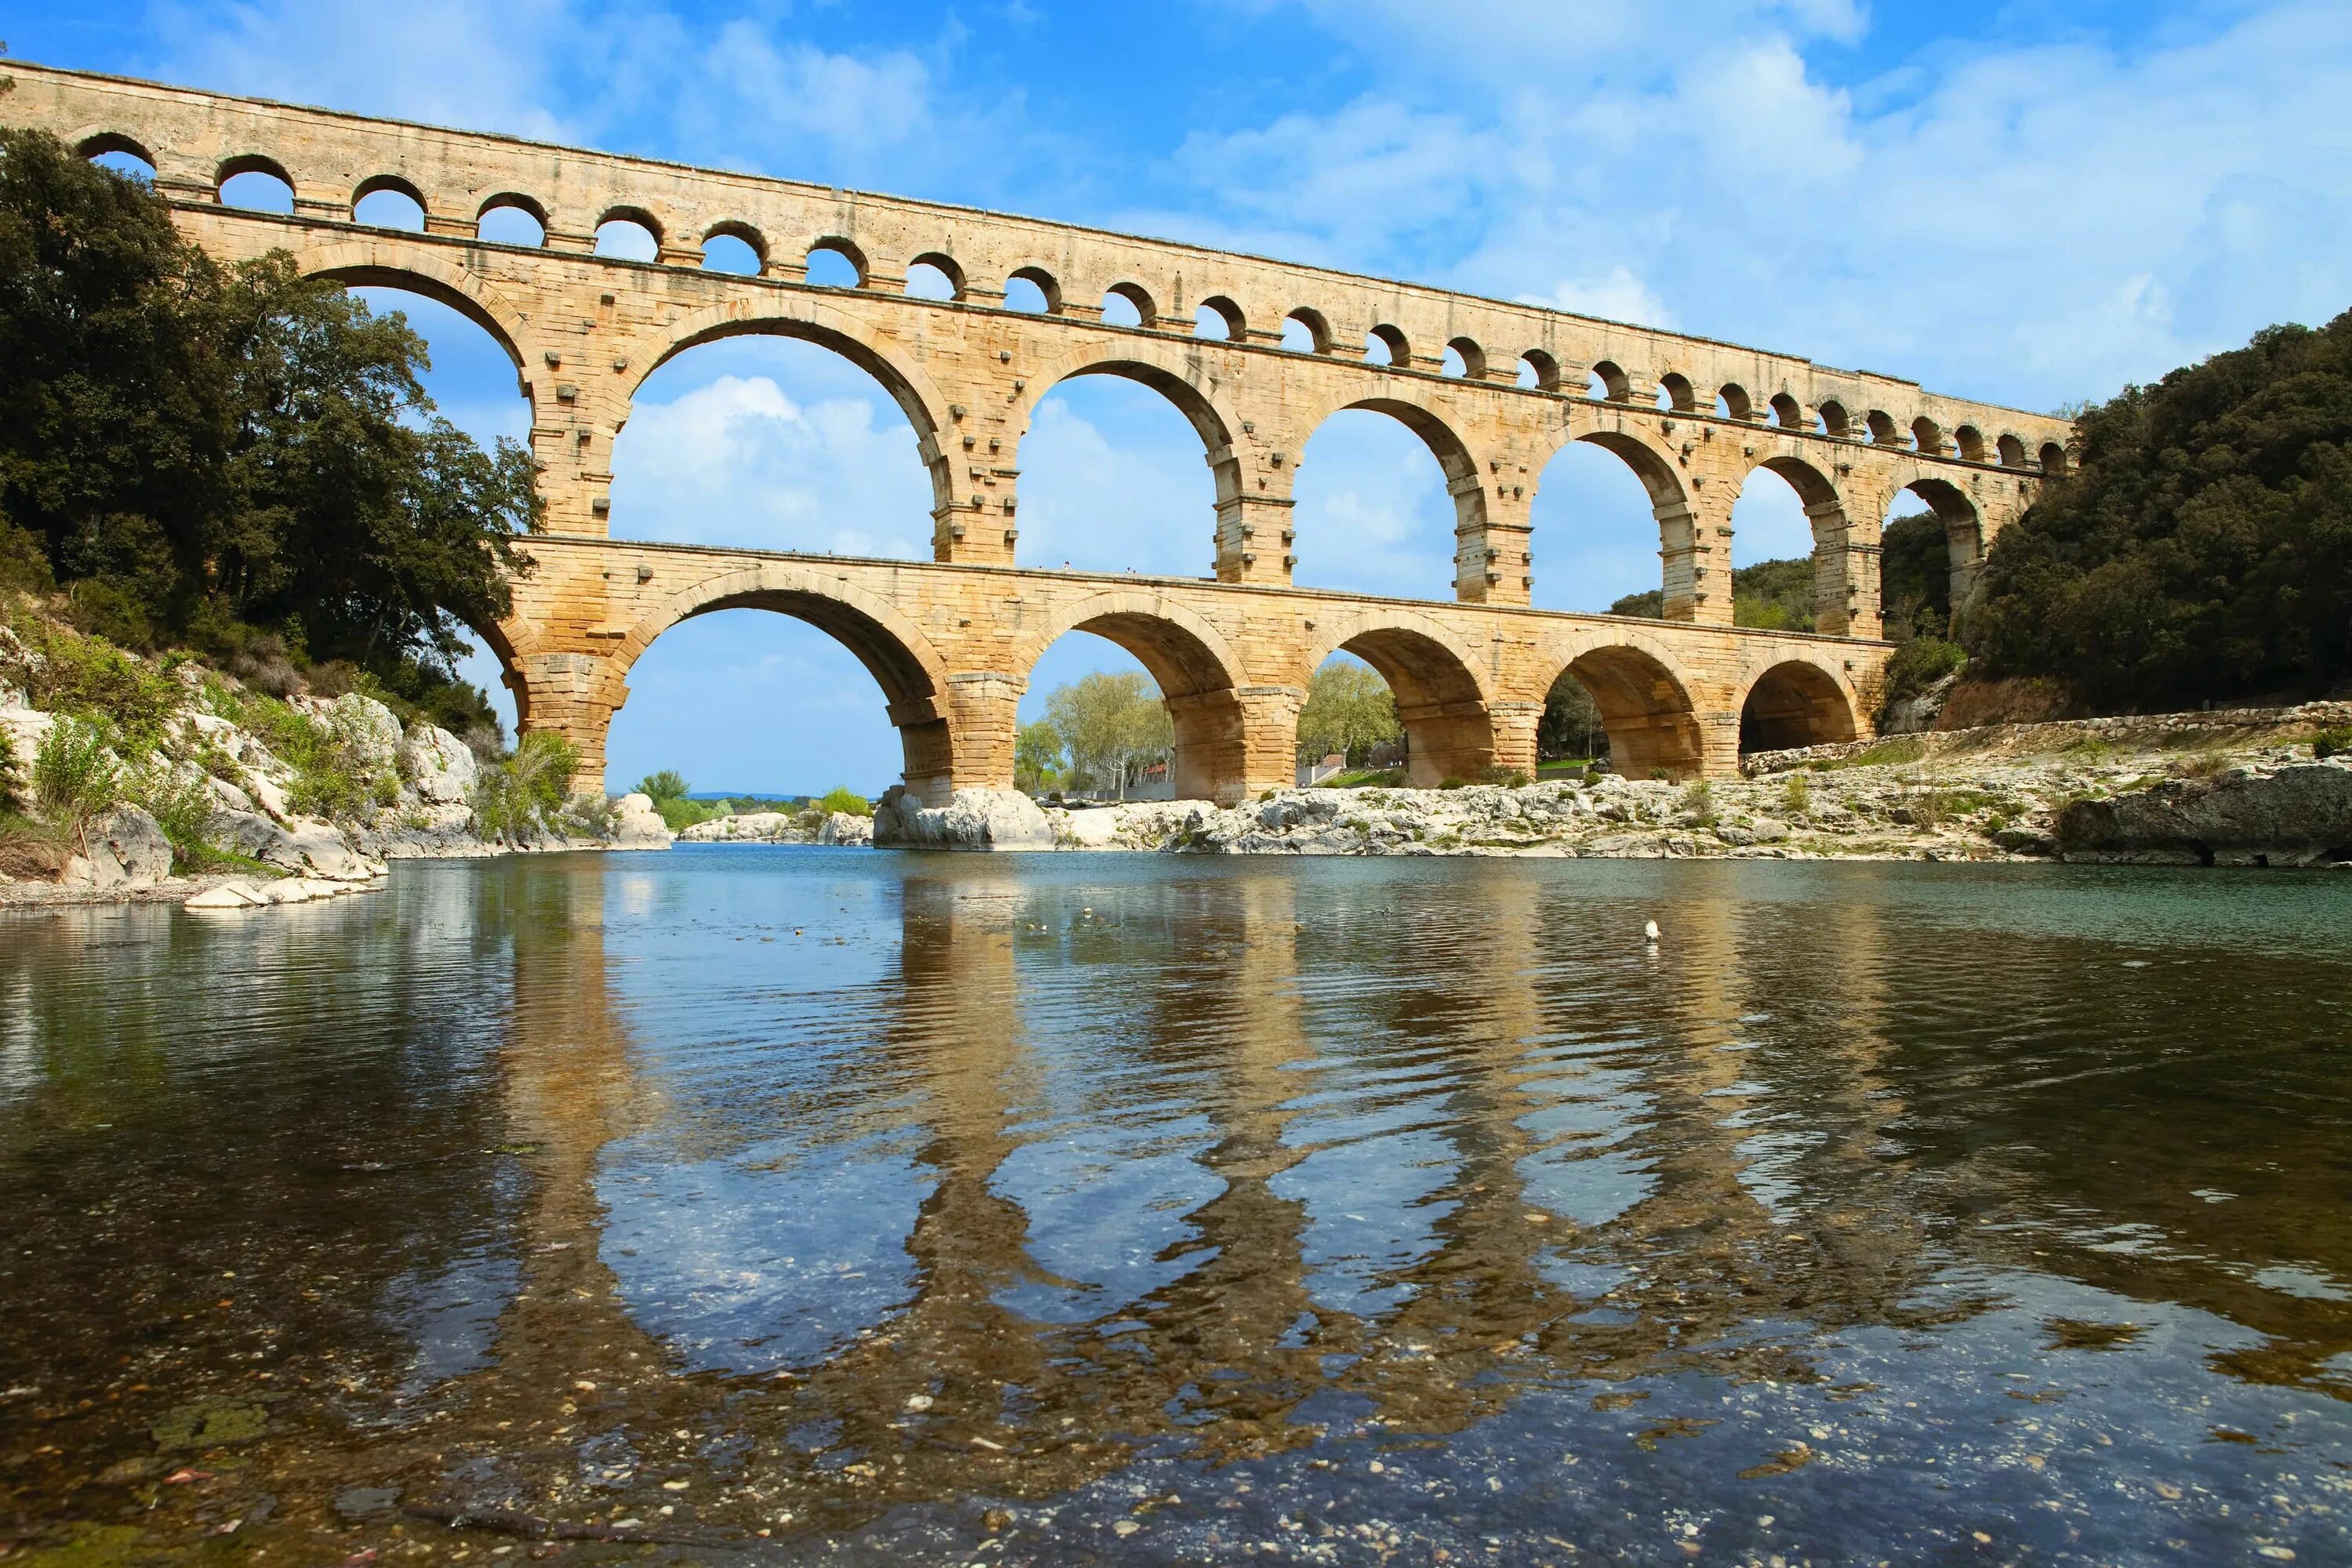 Римский водопровод. Пон-дю-гар Франция. Пон-дю-гар во Франции. Римский акведук. Акведук Пон дю-гар на юге Франции. Акведуки древнего Рима Пон дю гар.